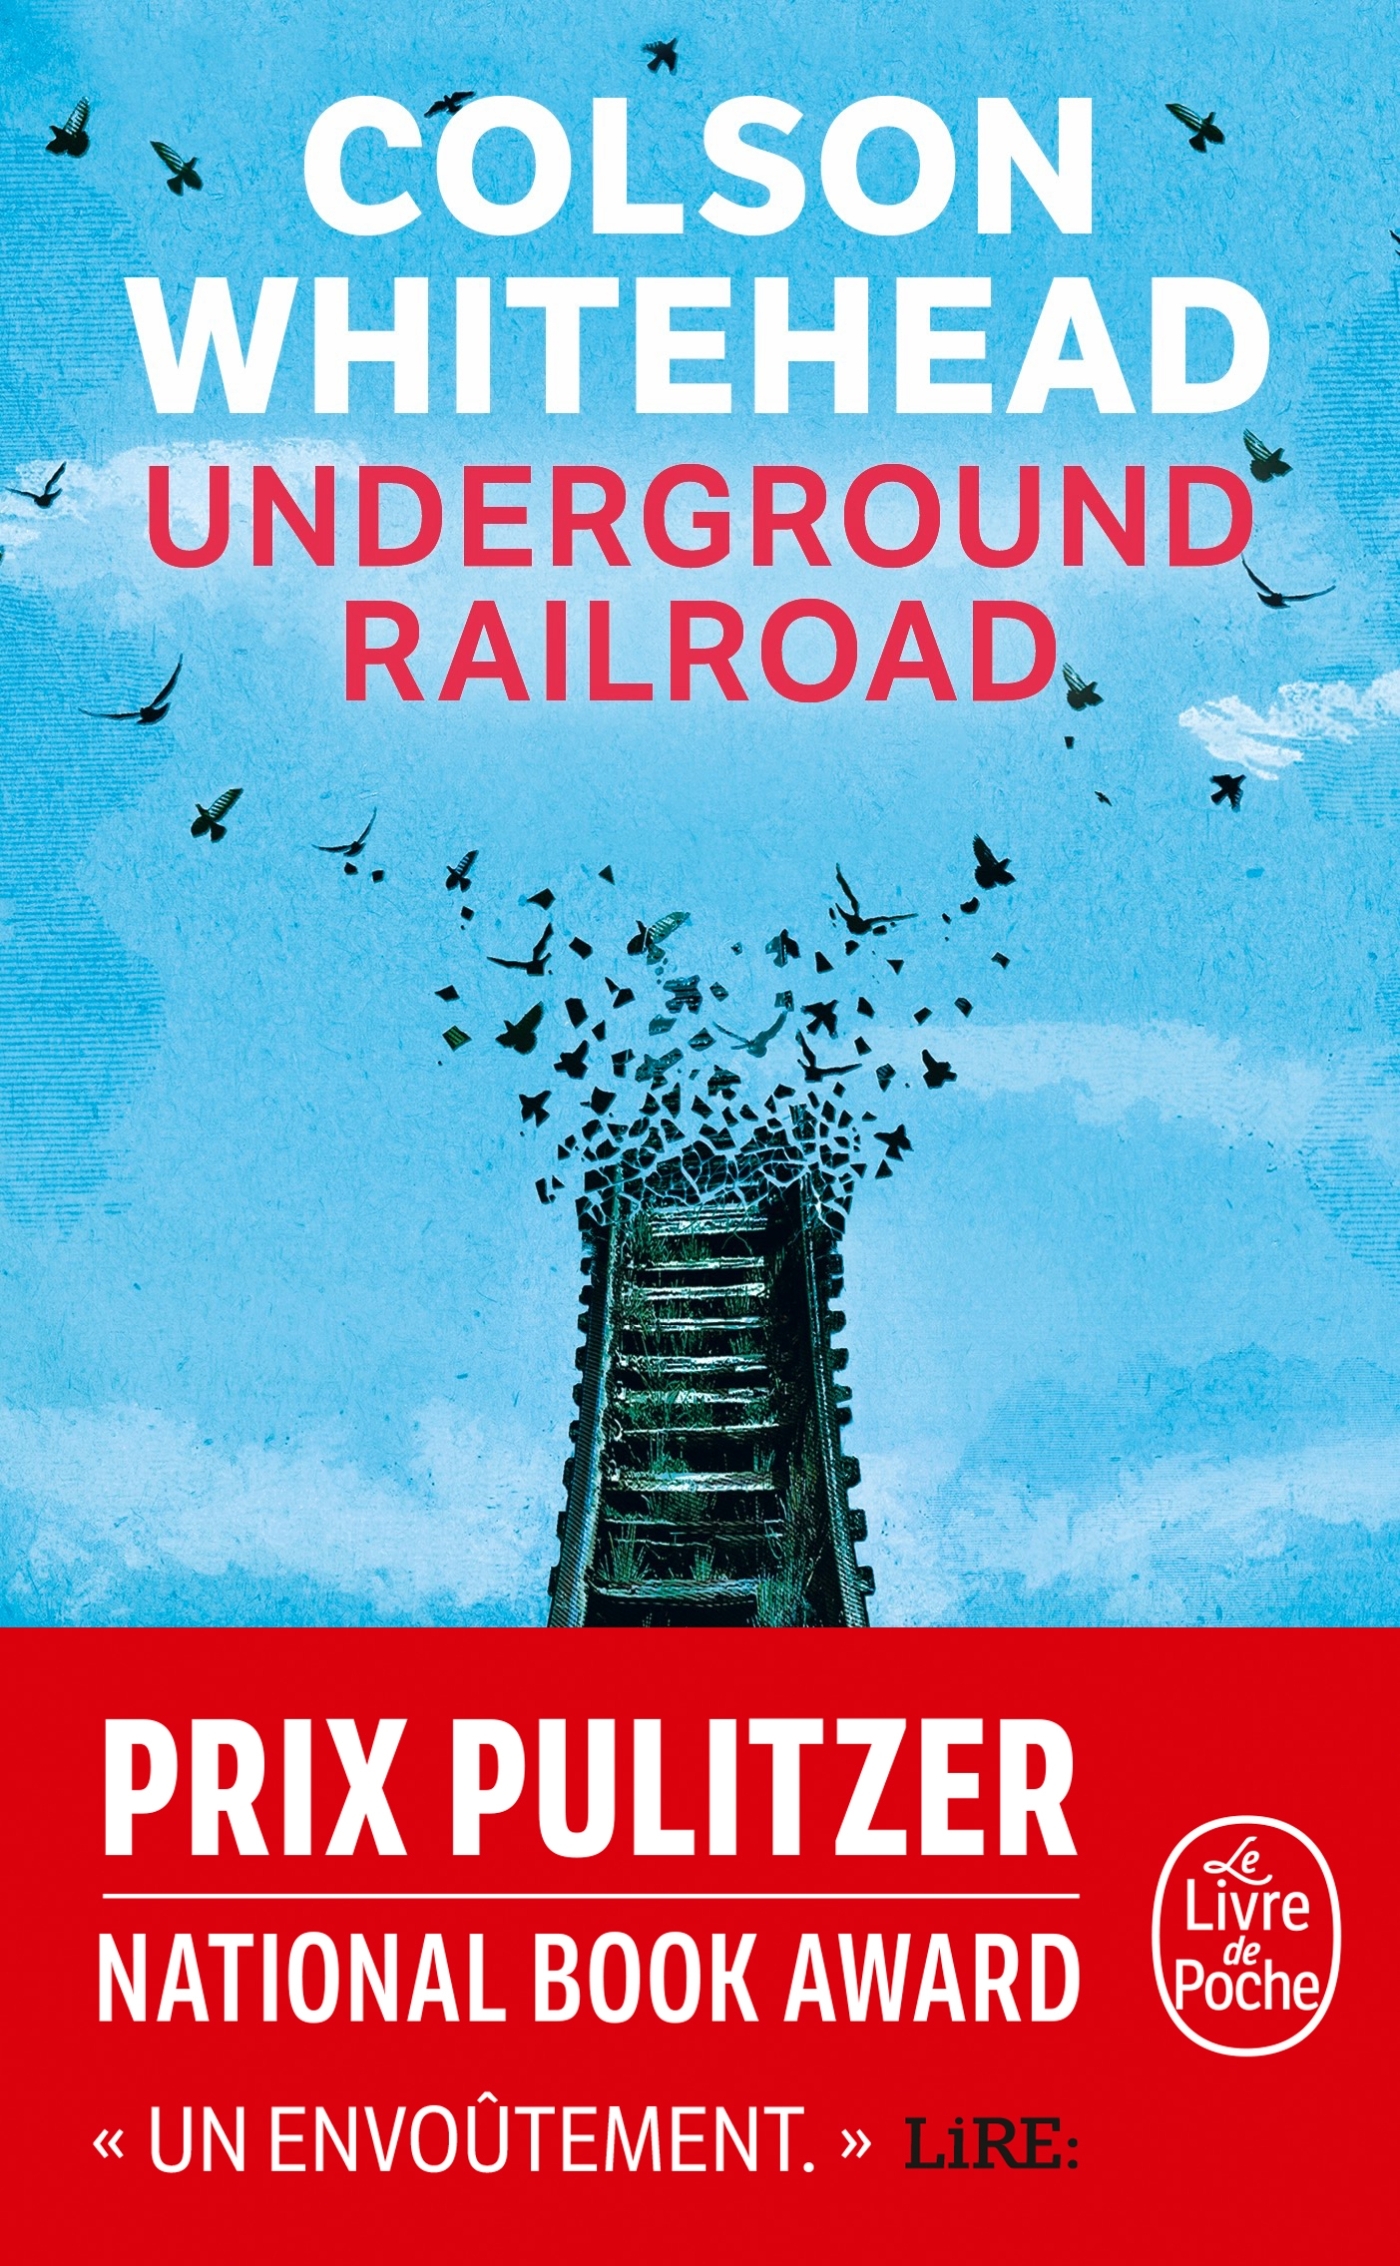 the underground railroad audio book